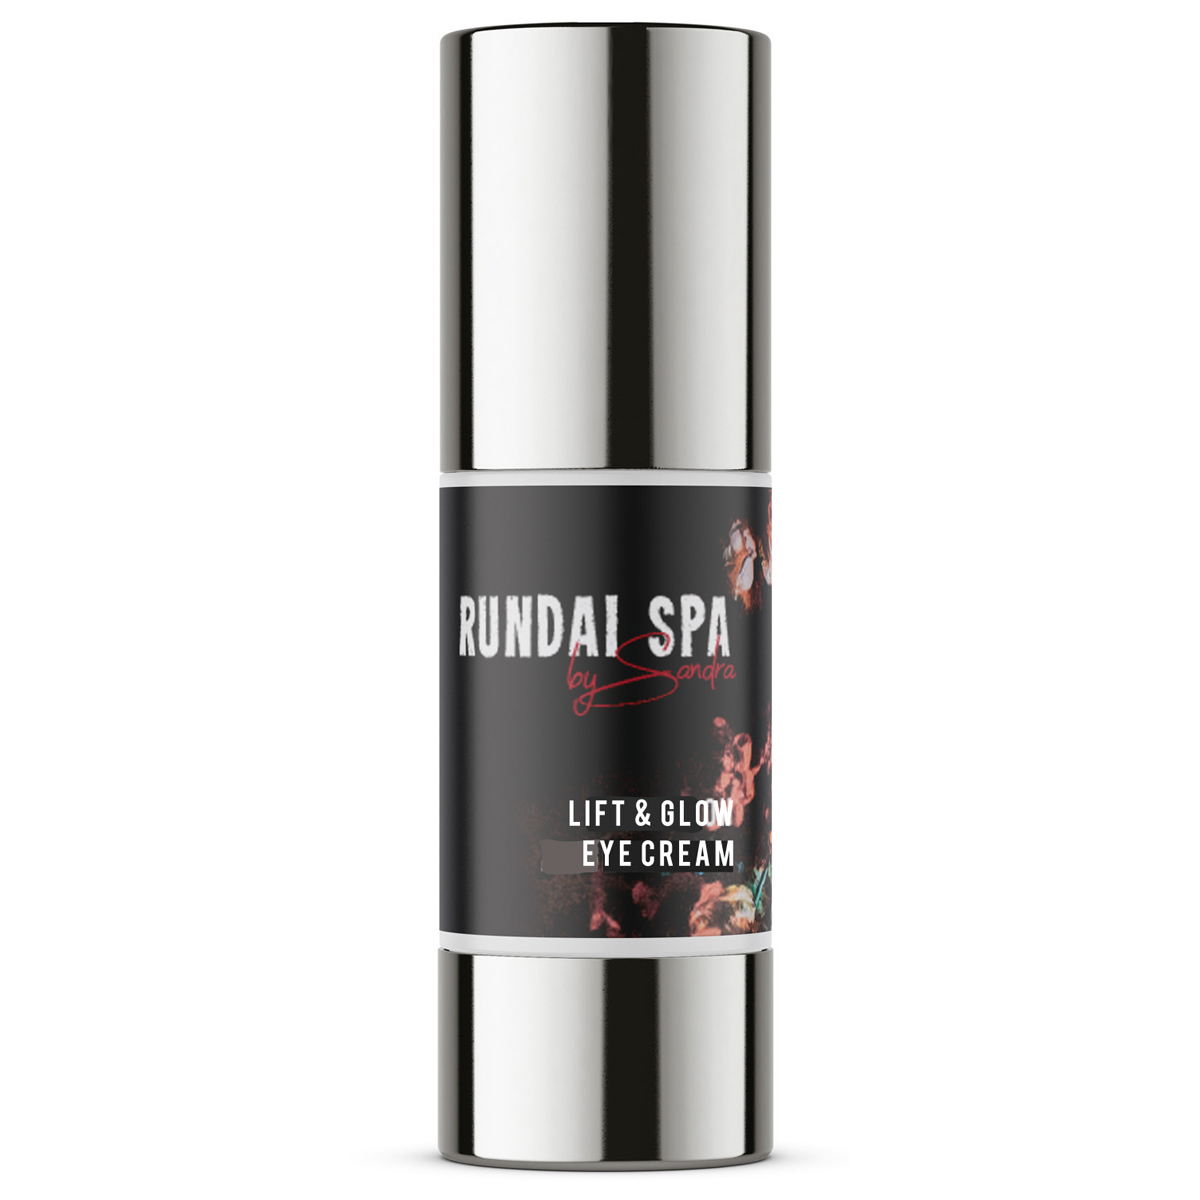 RUNDAI SPA – Lift & Glow Eye Cream